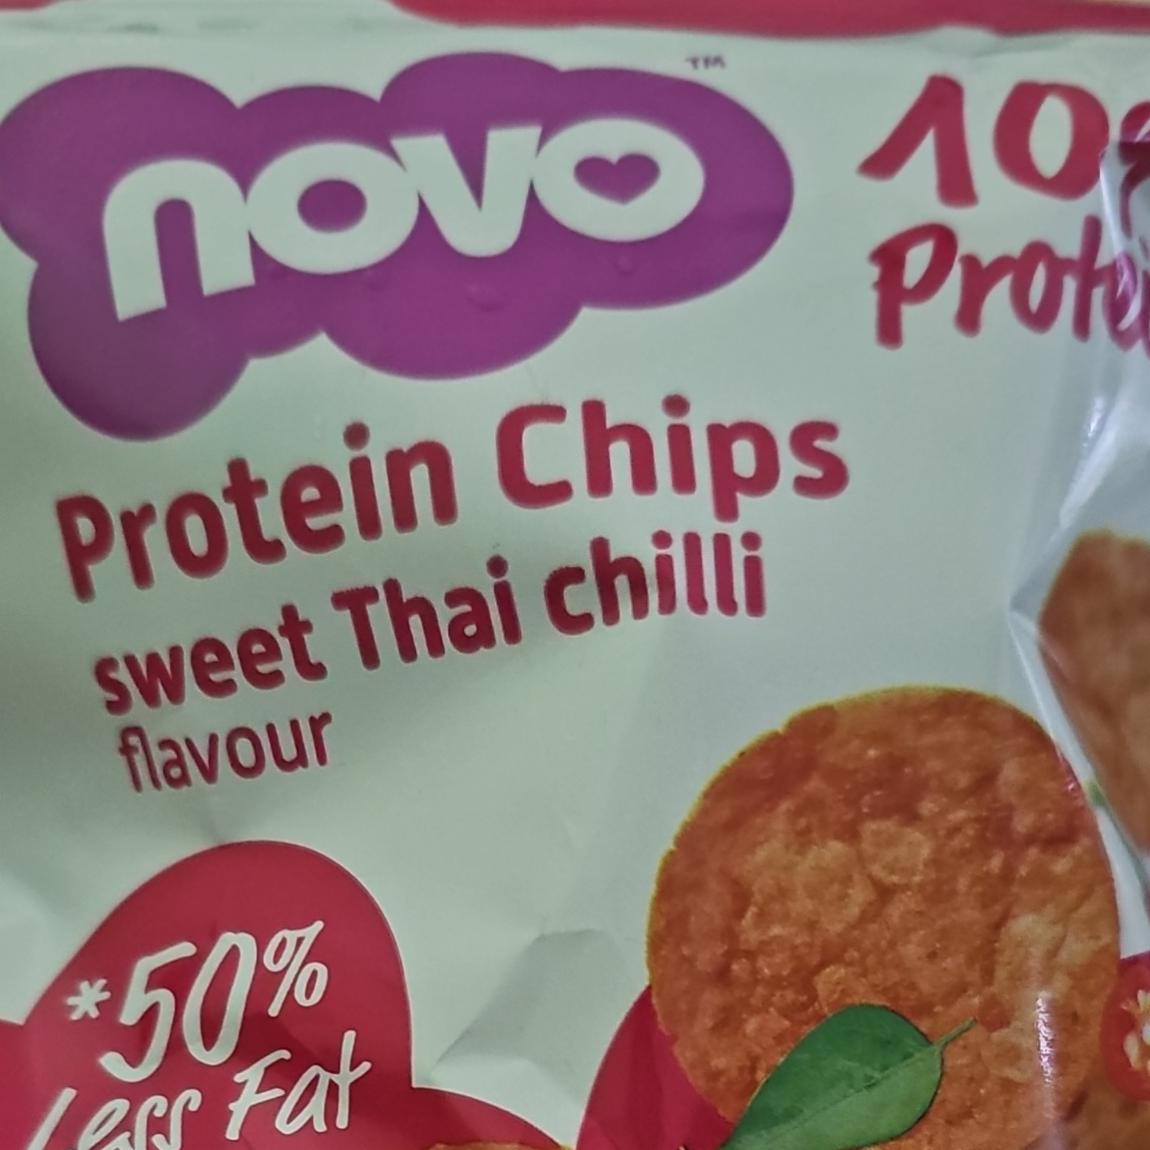 Фото - Протеиновый чипсы Protein Chips sweet thai chilli Novo Nutrition